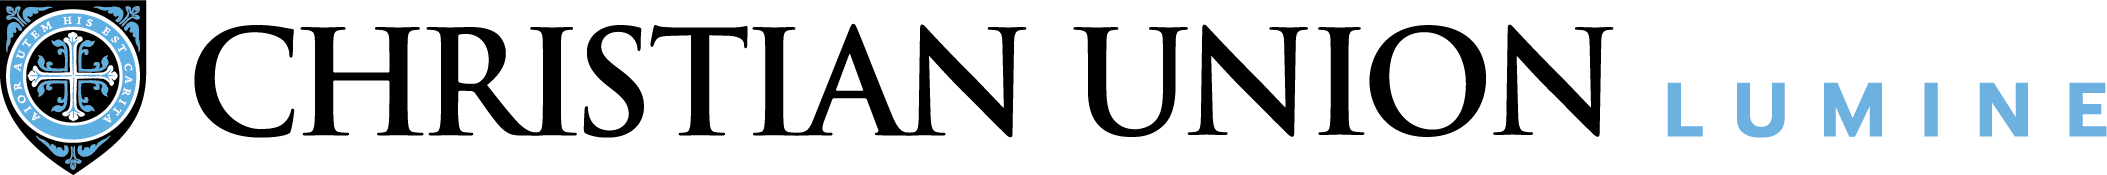 Christian Union Lumine Logo